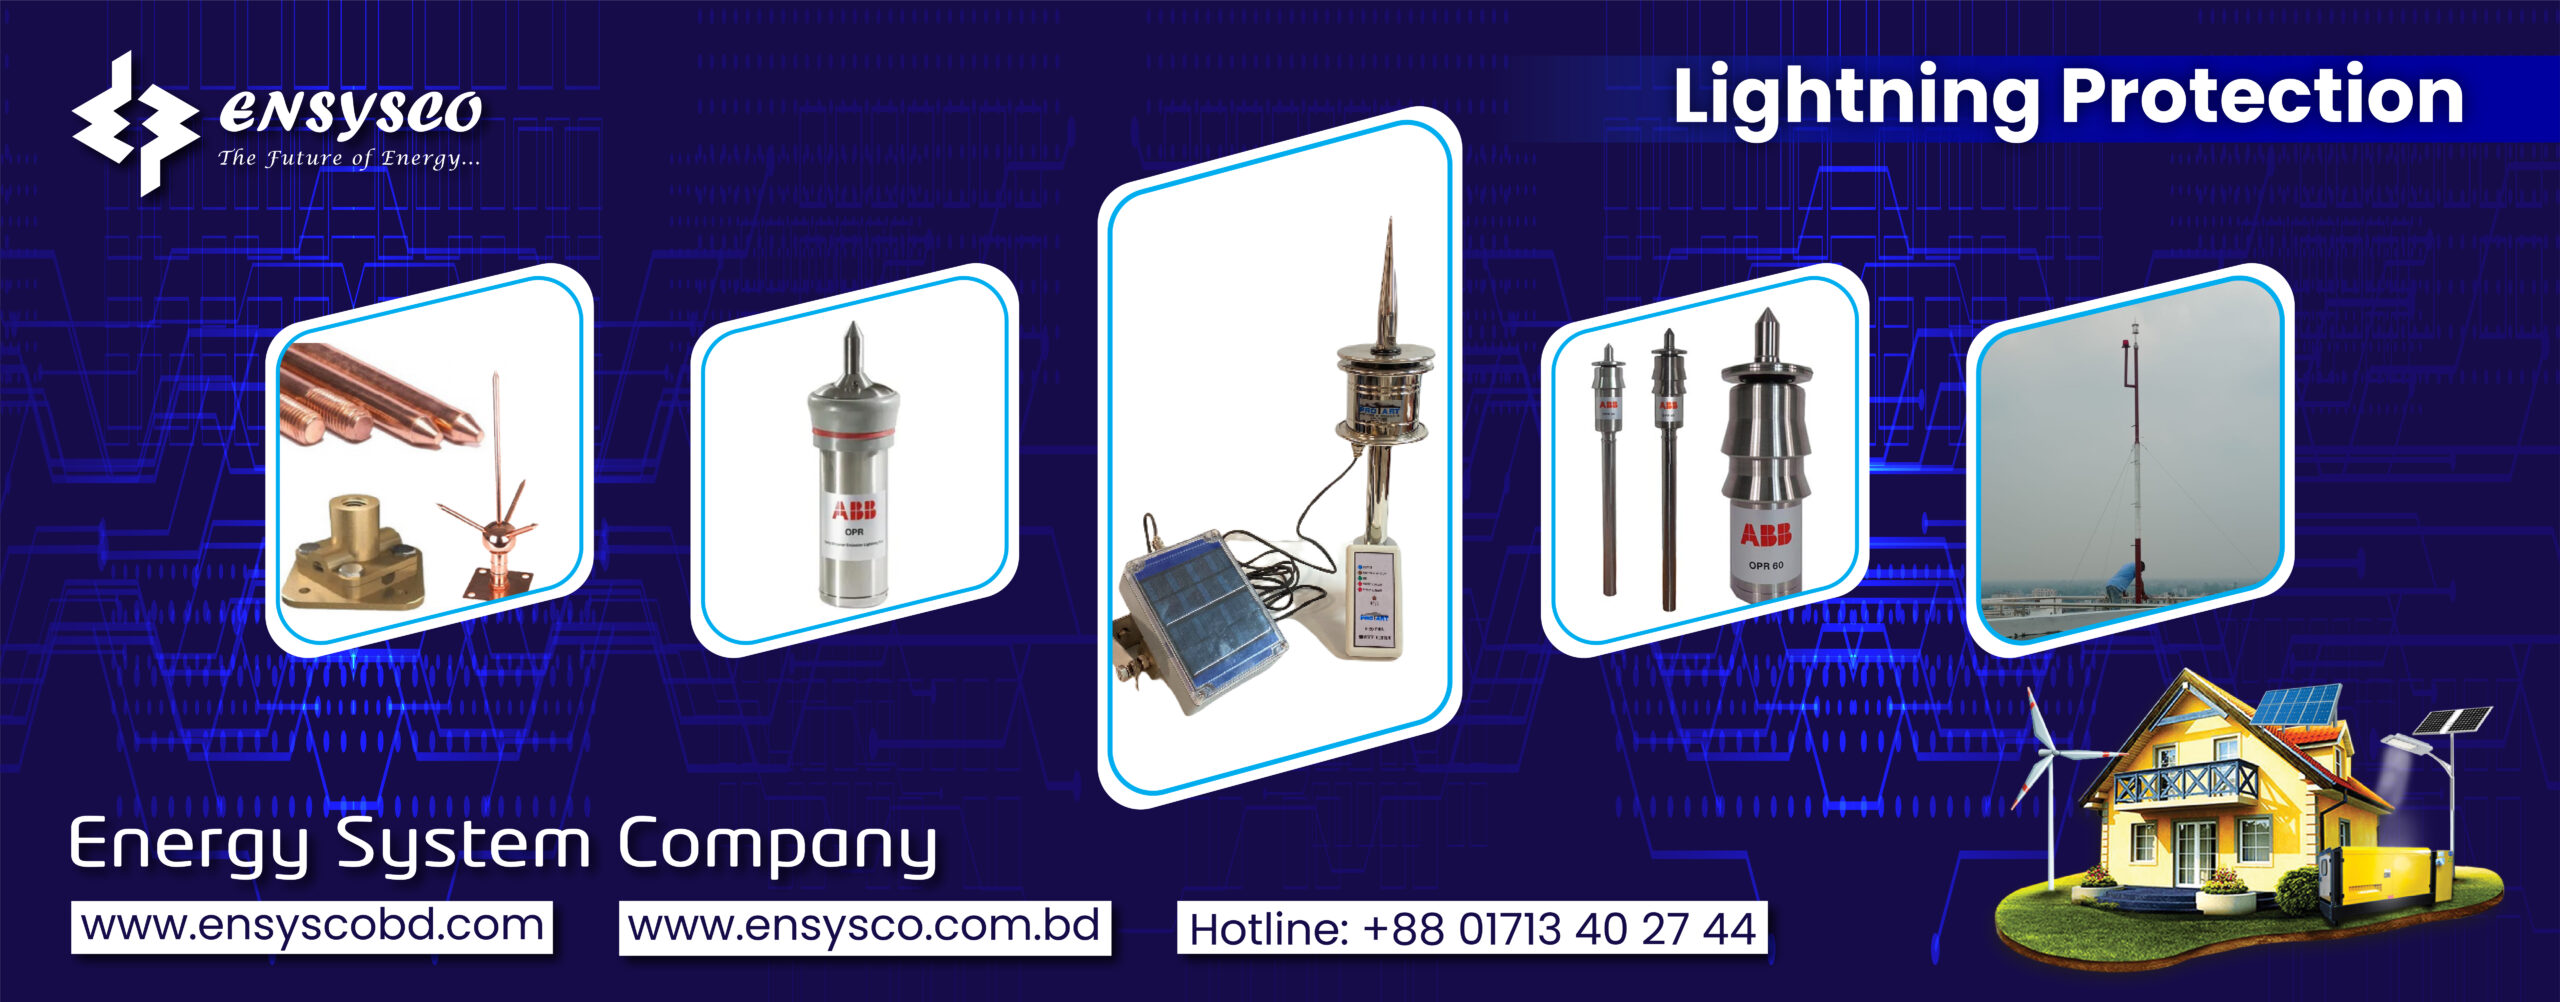 Lightning Protection System Price in Bangladesh